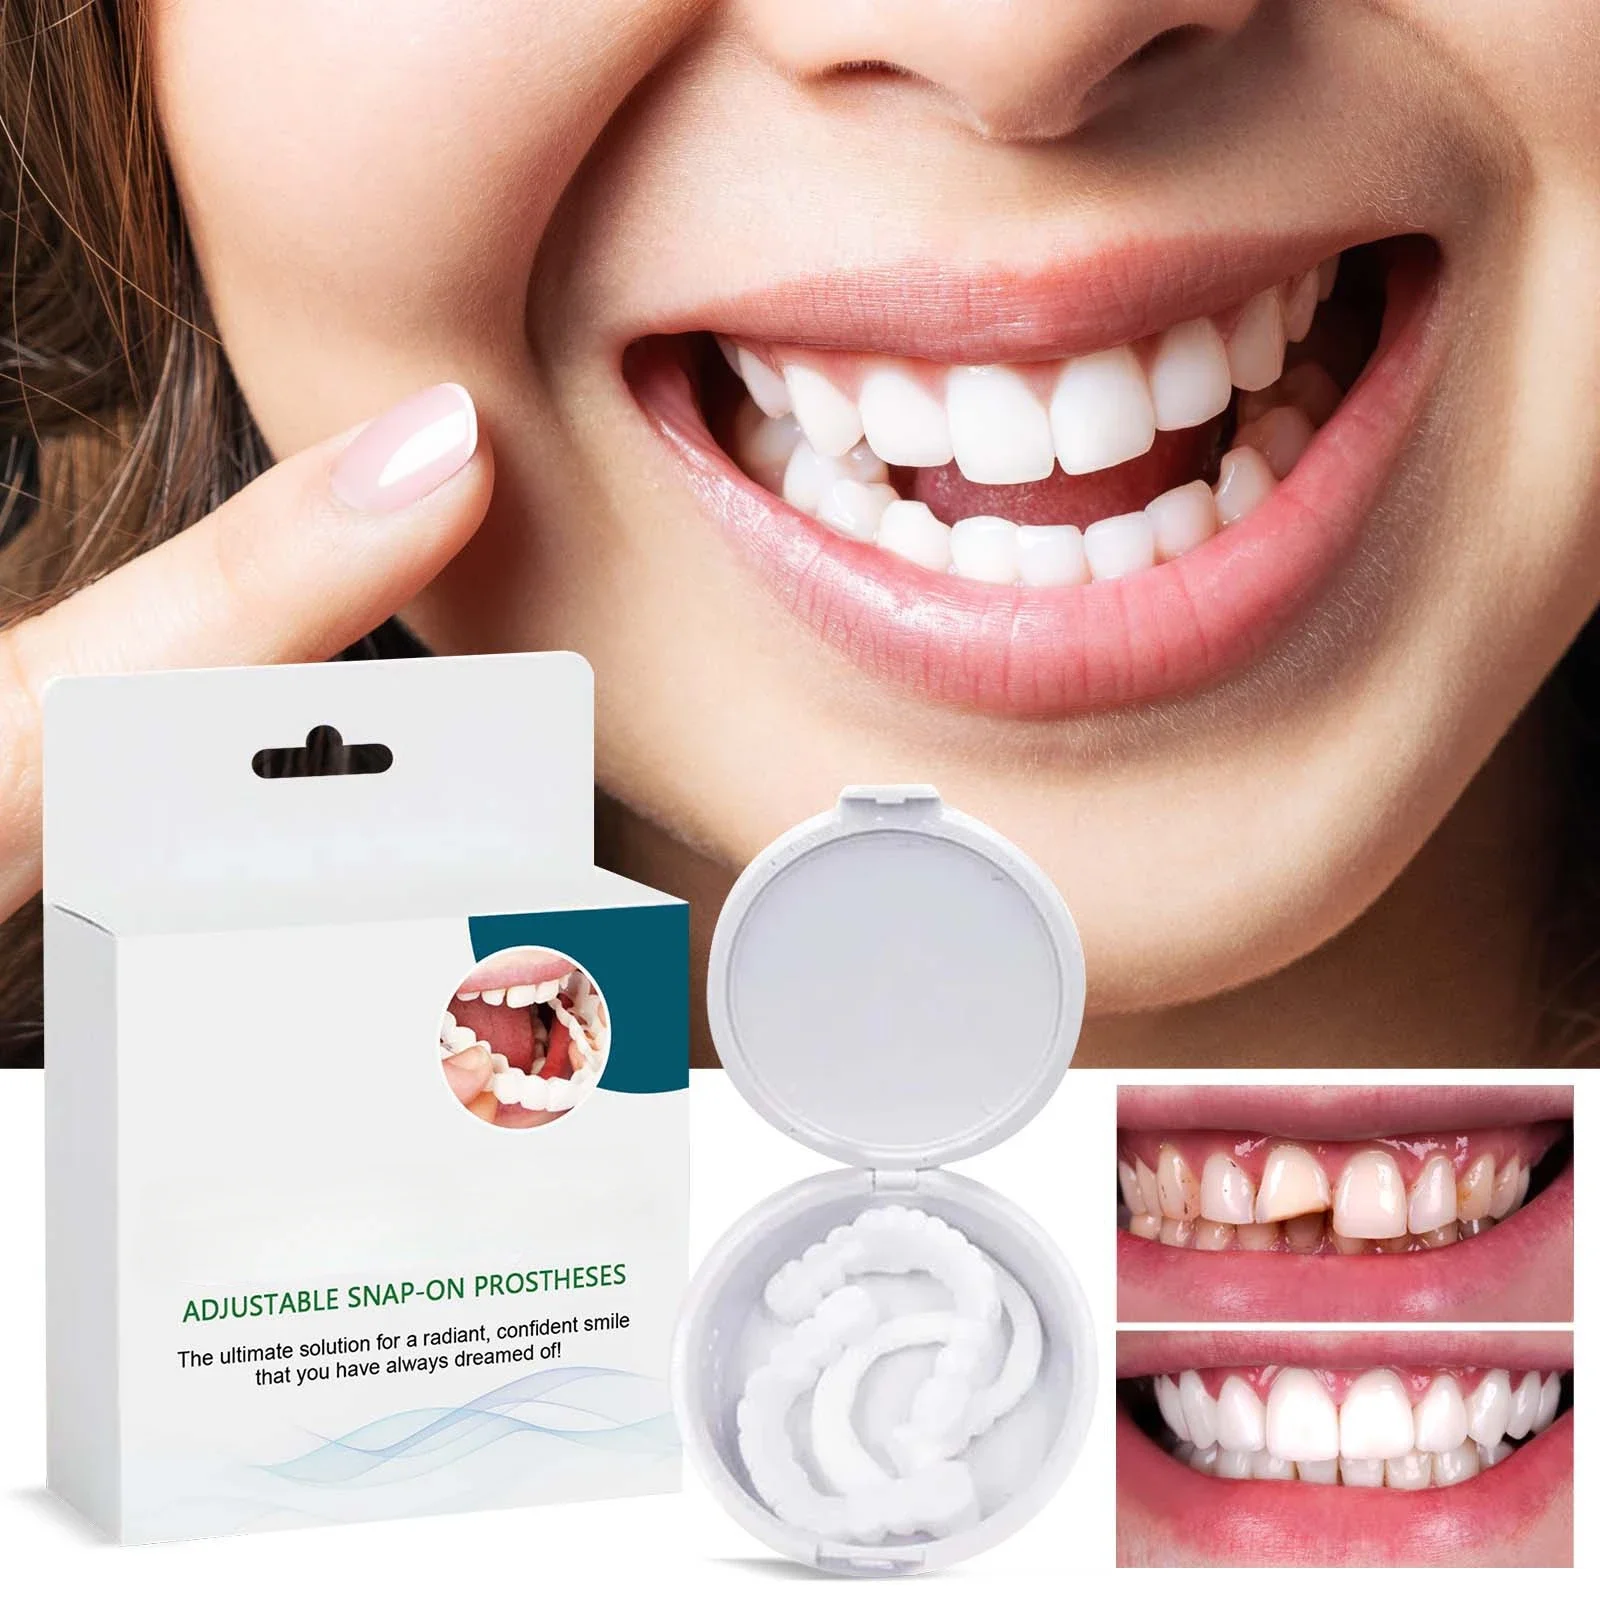 

Adjustable snap-on dentures Cosmetic teeth interdental braces orthodontic denture kits for women and men